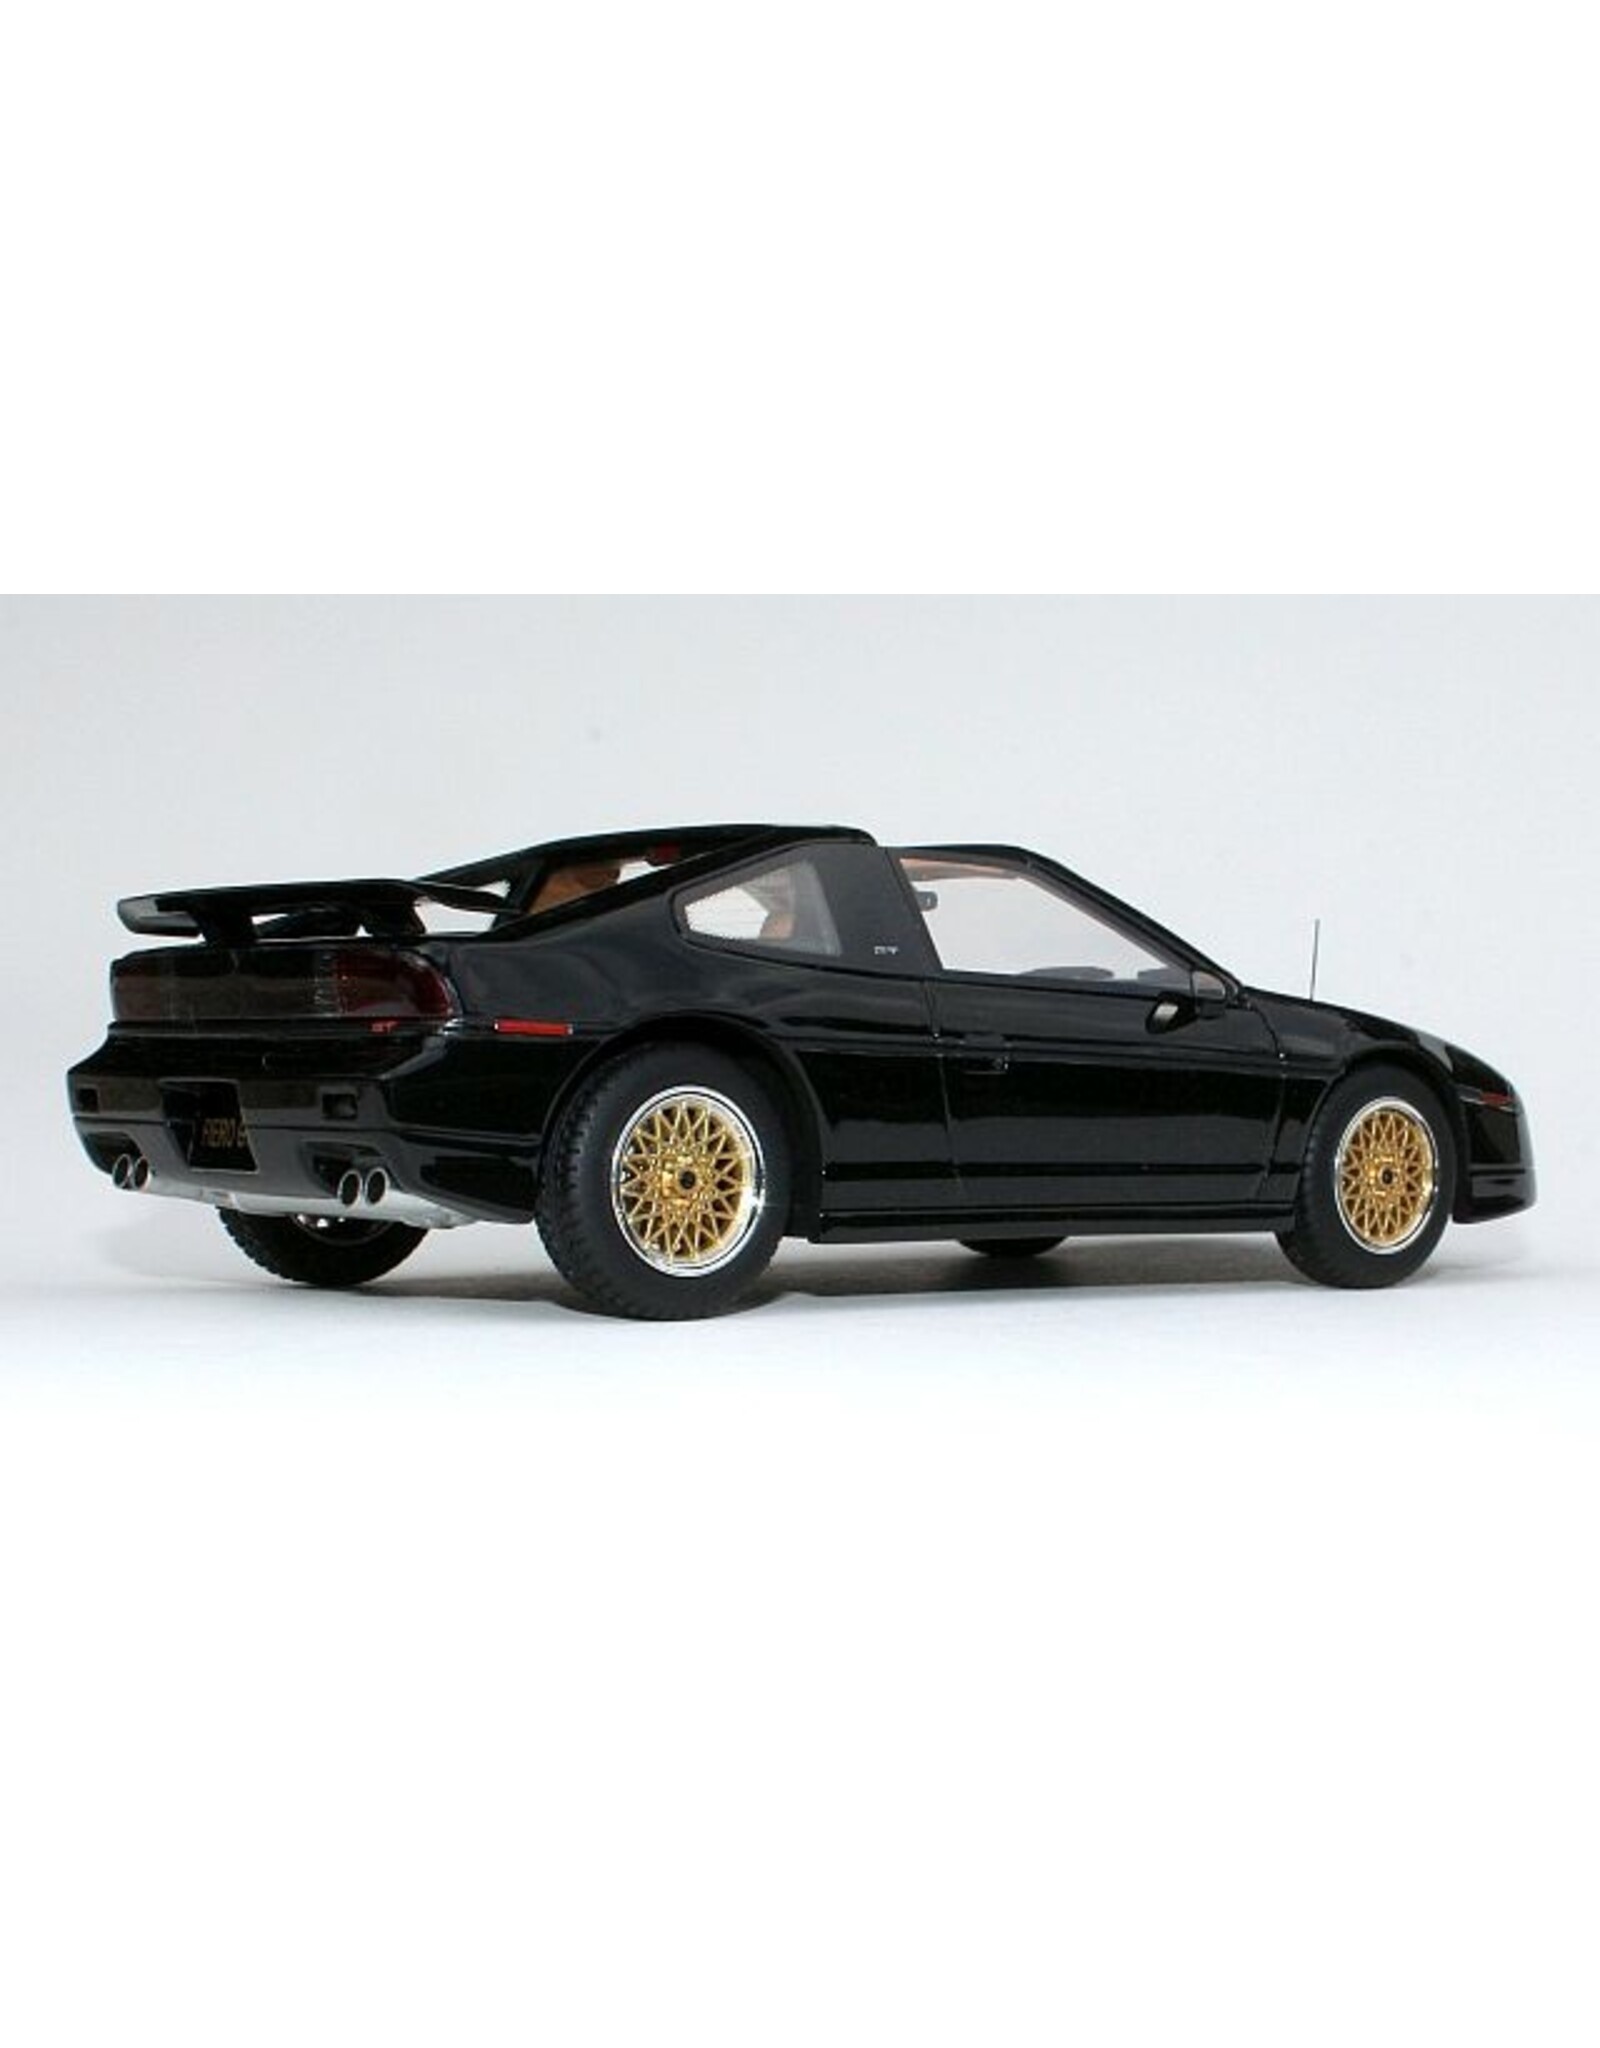 Pontiac Pontiac Fiero GT(1988)black